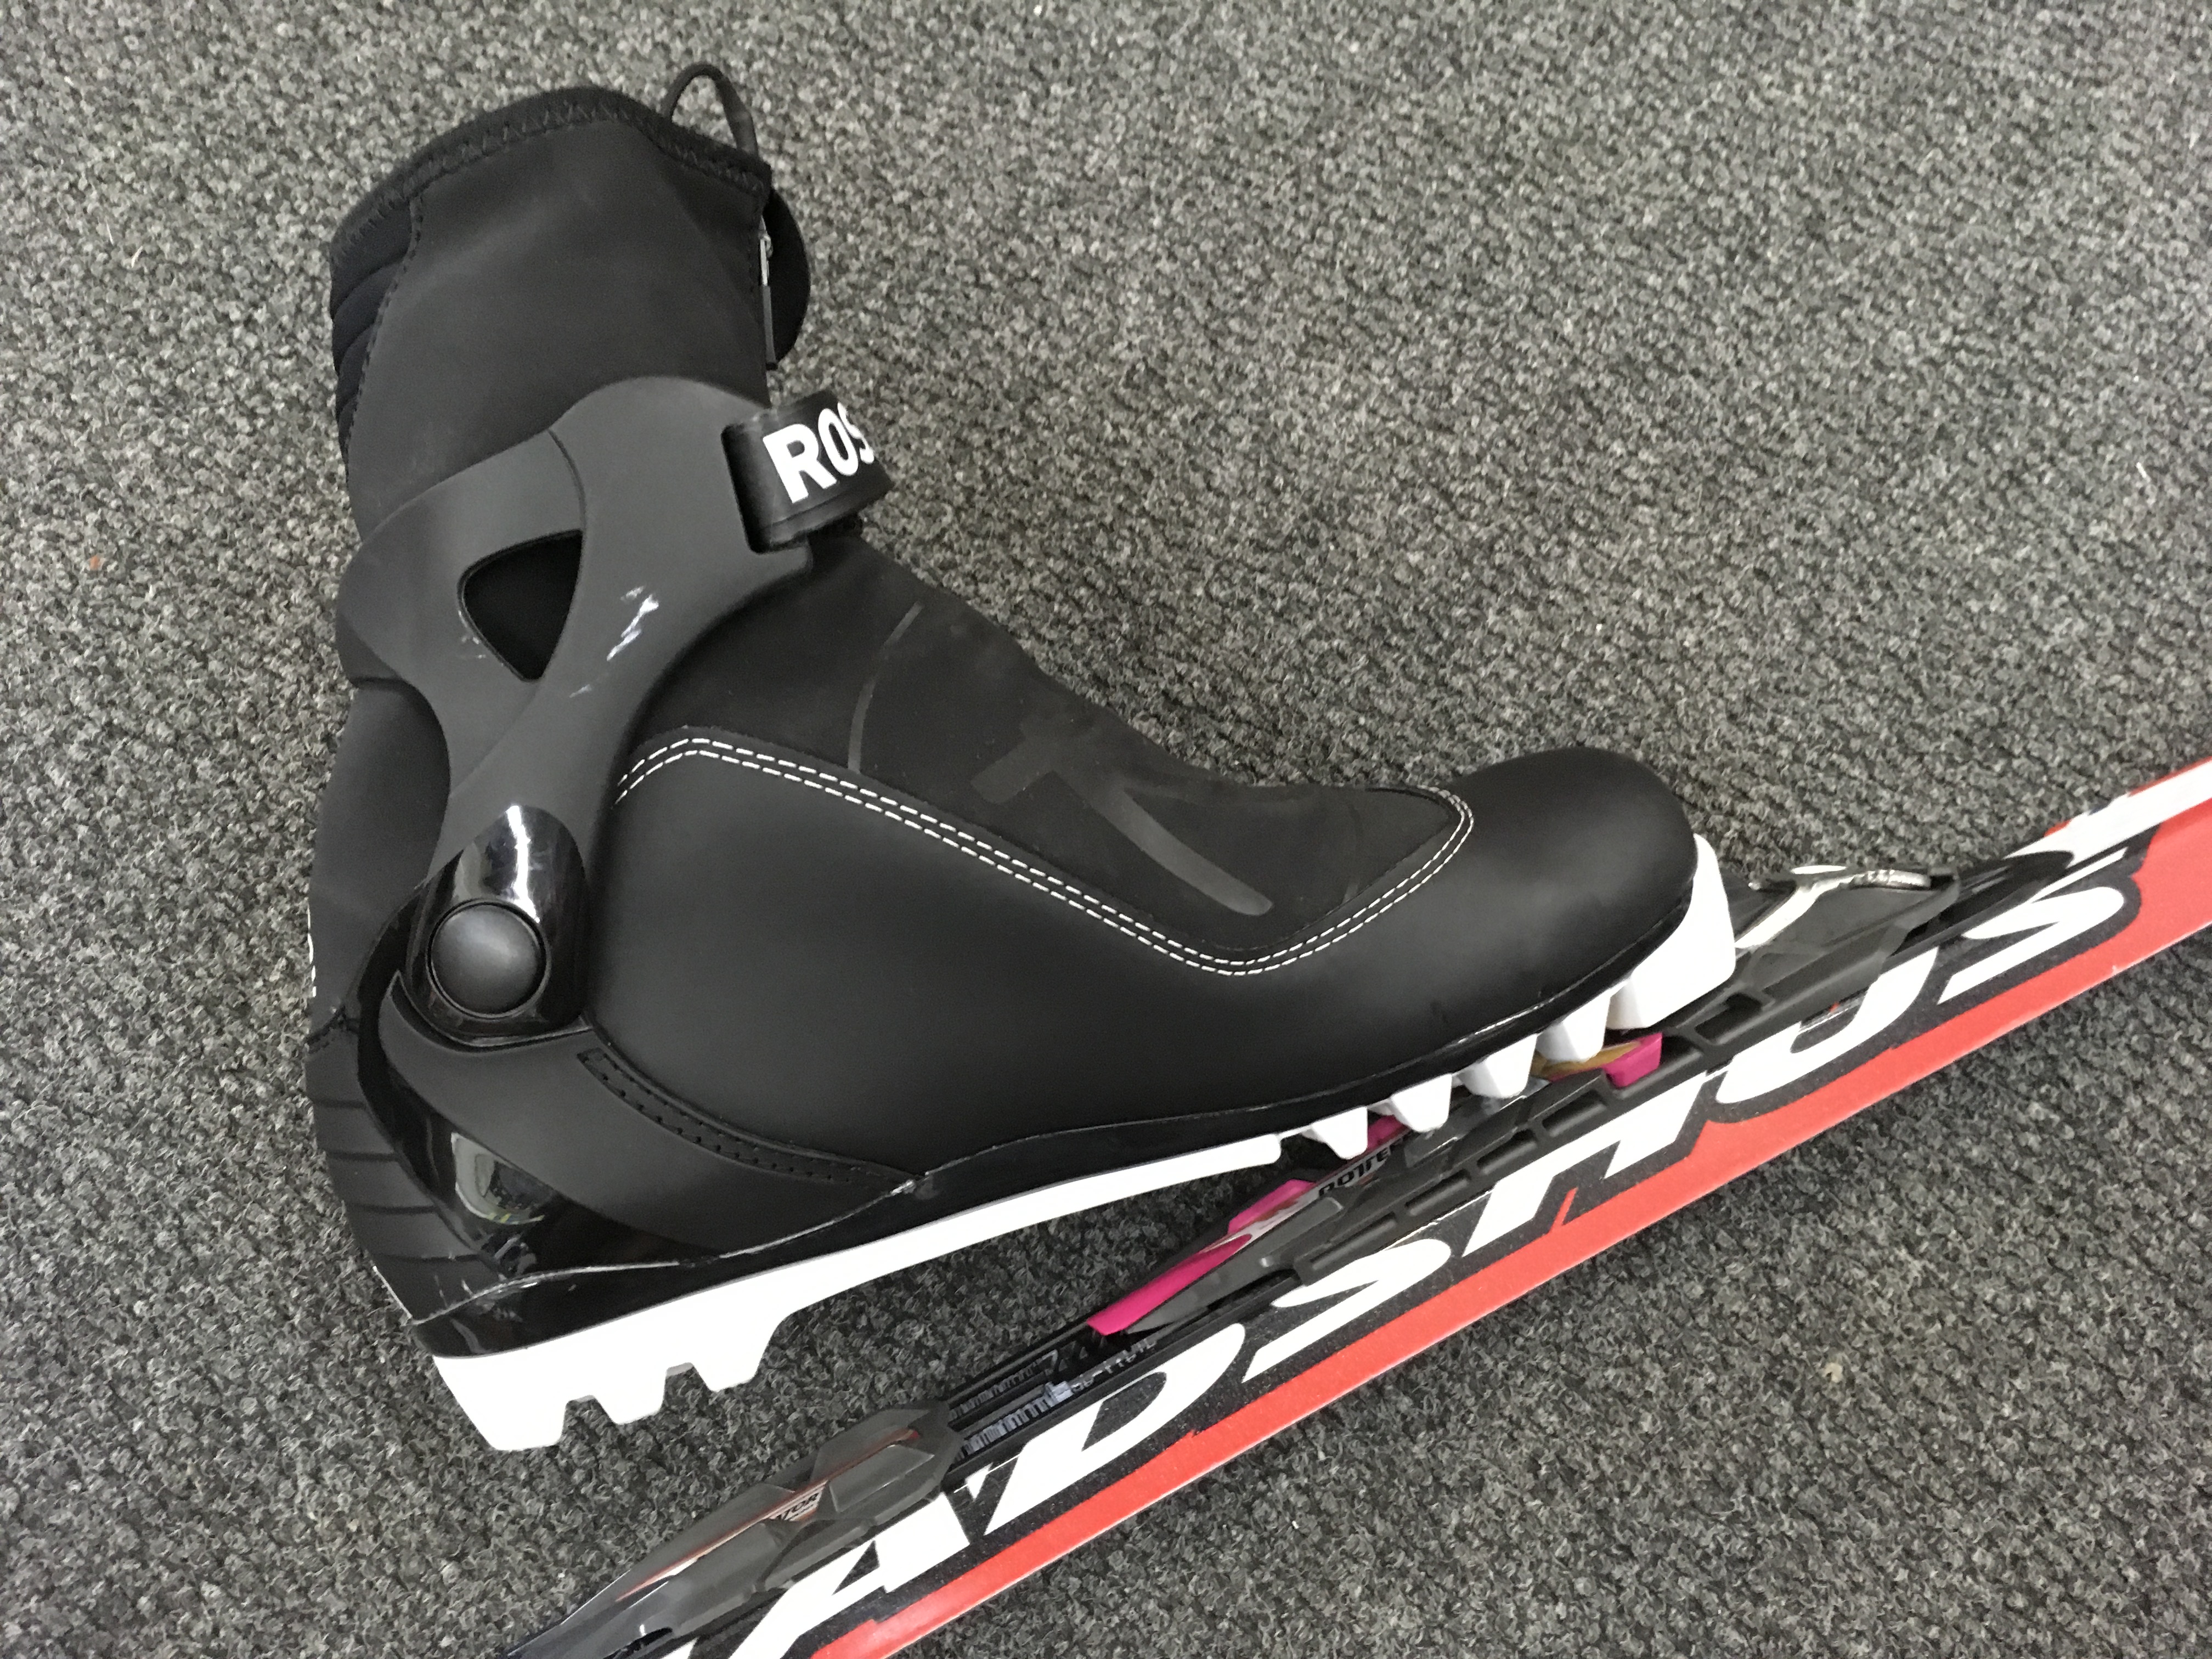 A track ski for xc ski racing with boot